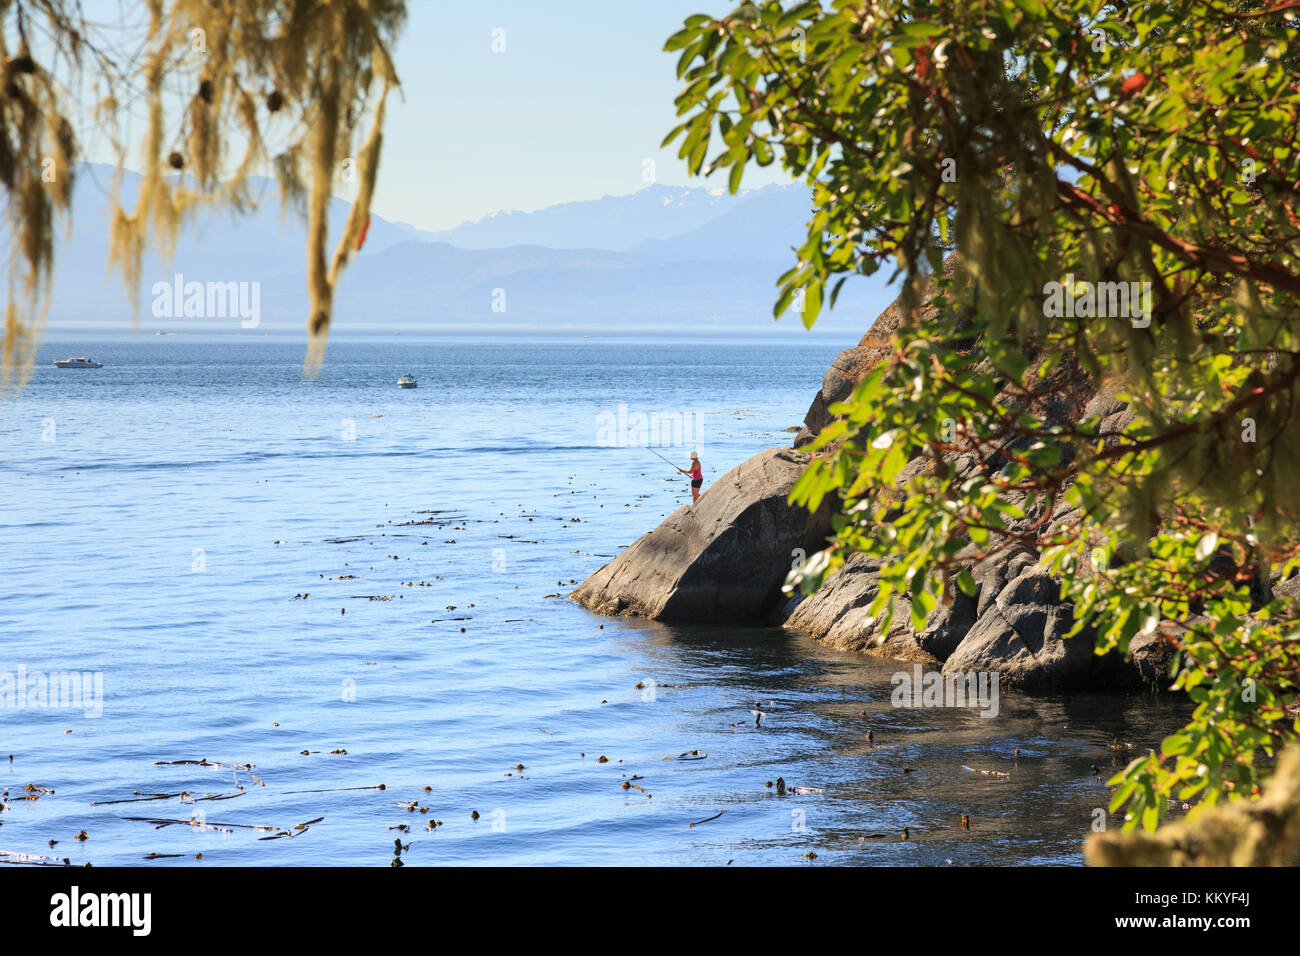 East sooke Regional Park, sooke, Vancouver Island, British Columbia, cananda Stockfoto